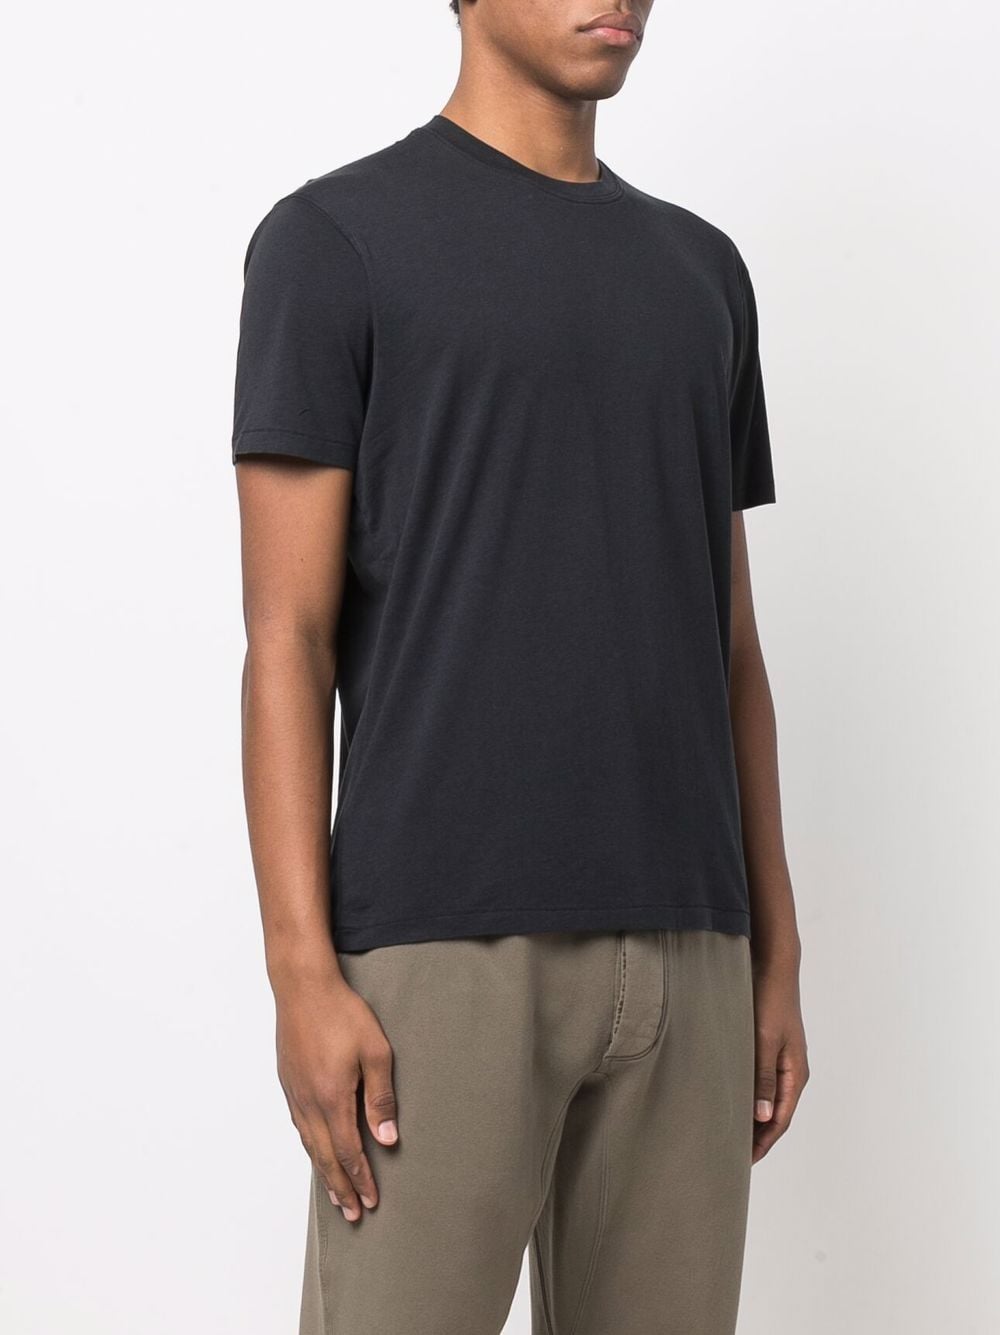 TOM FORD Viscose Short Sleeve T-Shirt Black - MAISONDEFASHION.COM